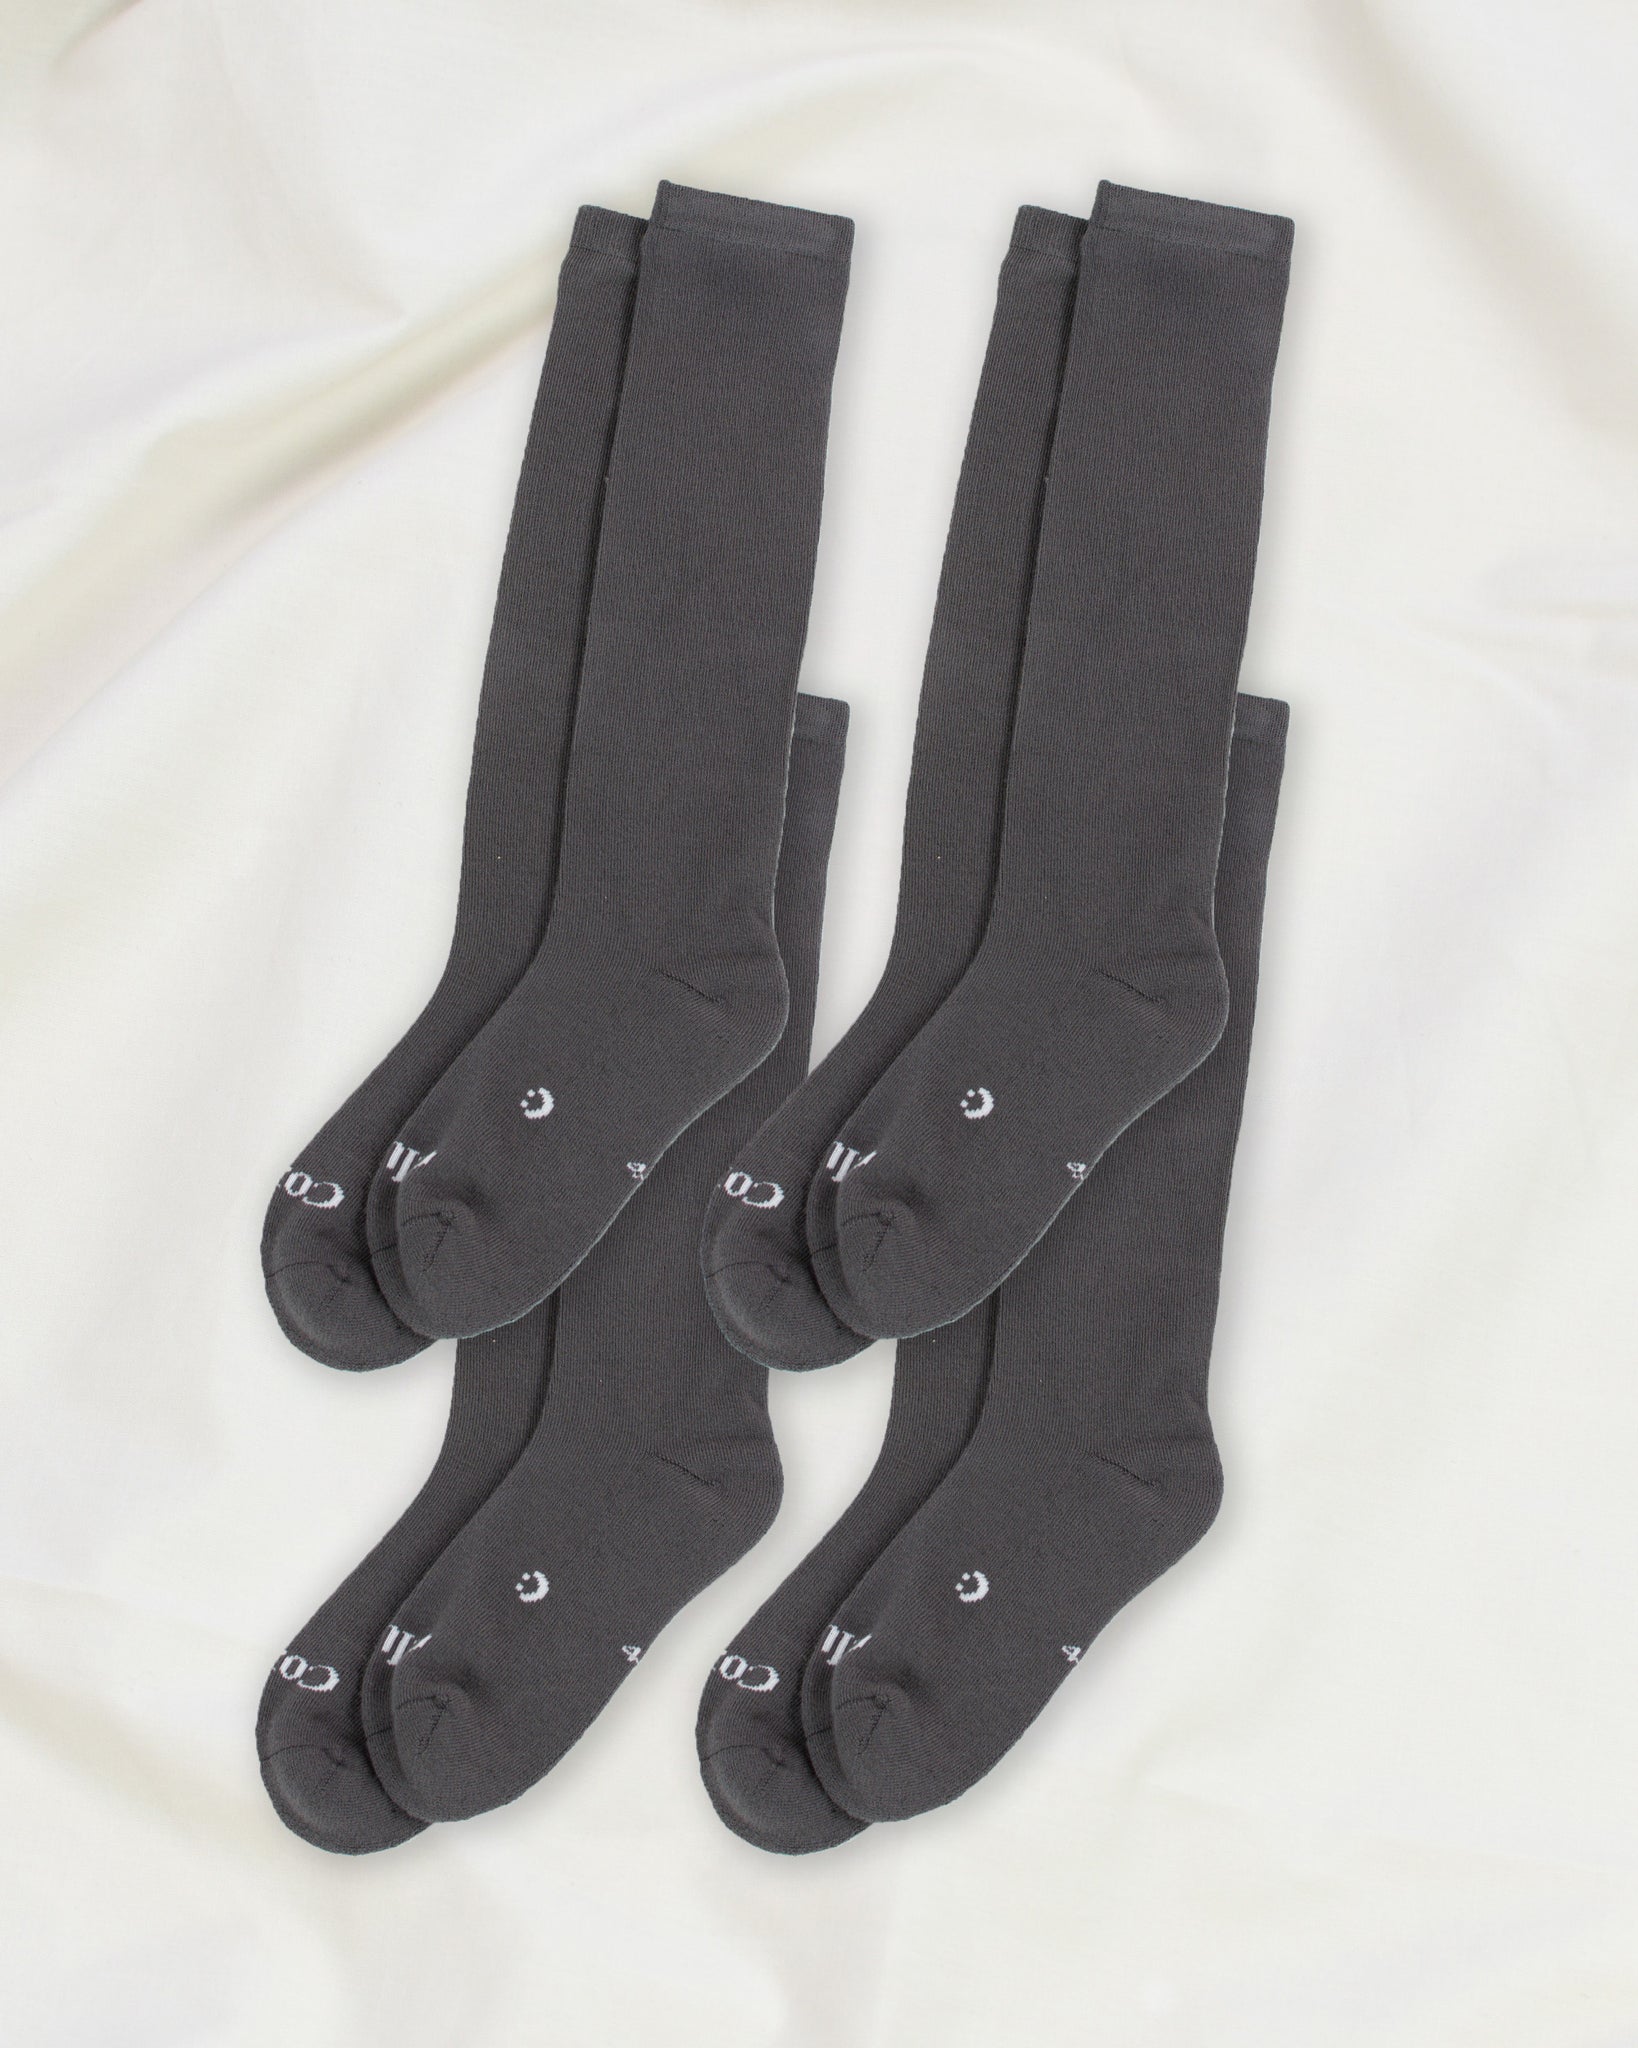 Everyday Knee-High Seamless Feel Socks 4 Pack (Kids) - Charcoal